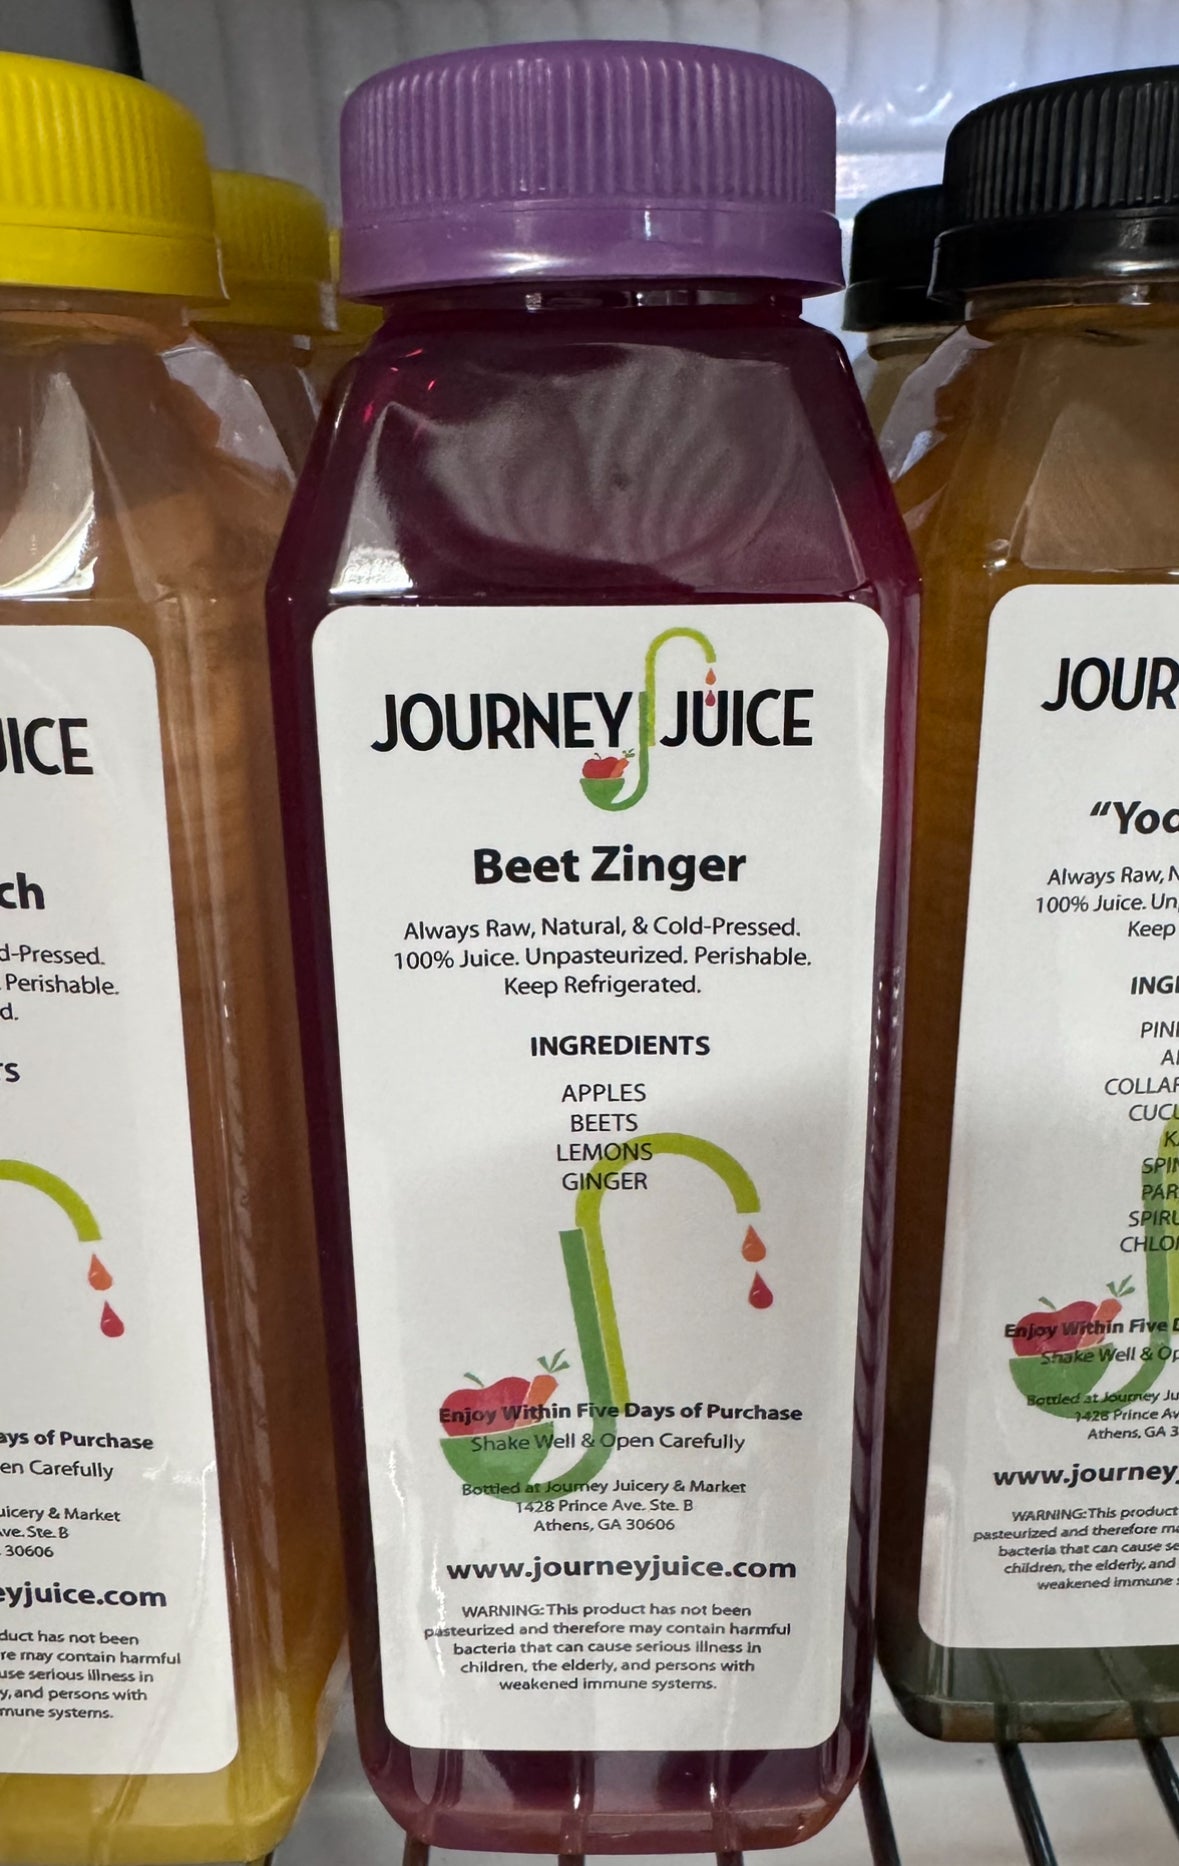 Journey Juice 10 oz bottle: Beet zinger